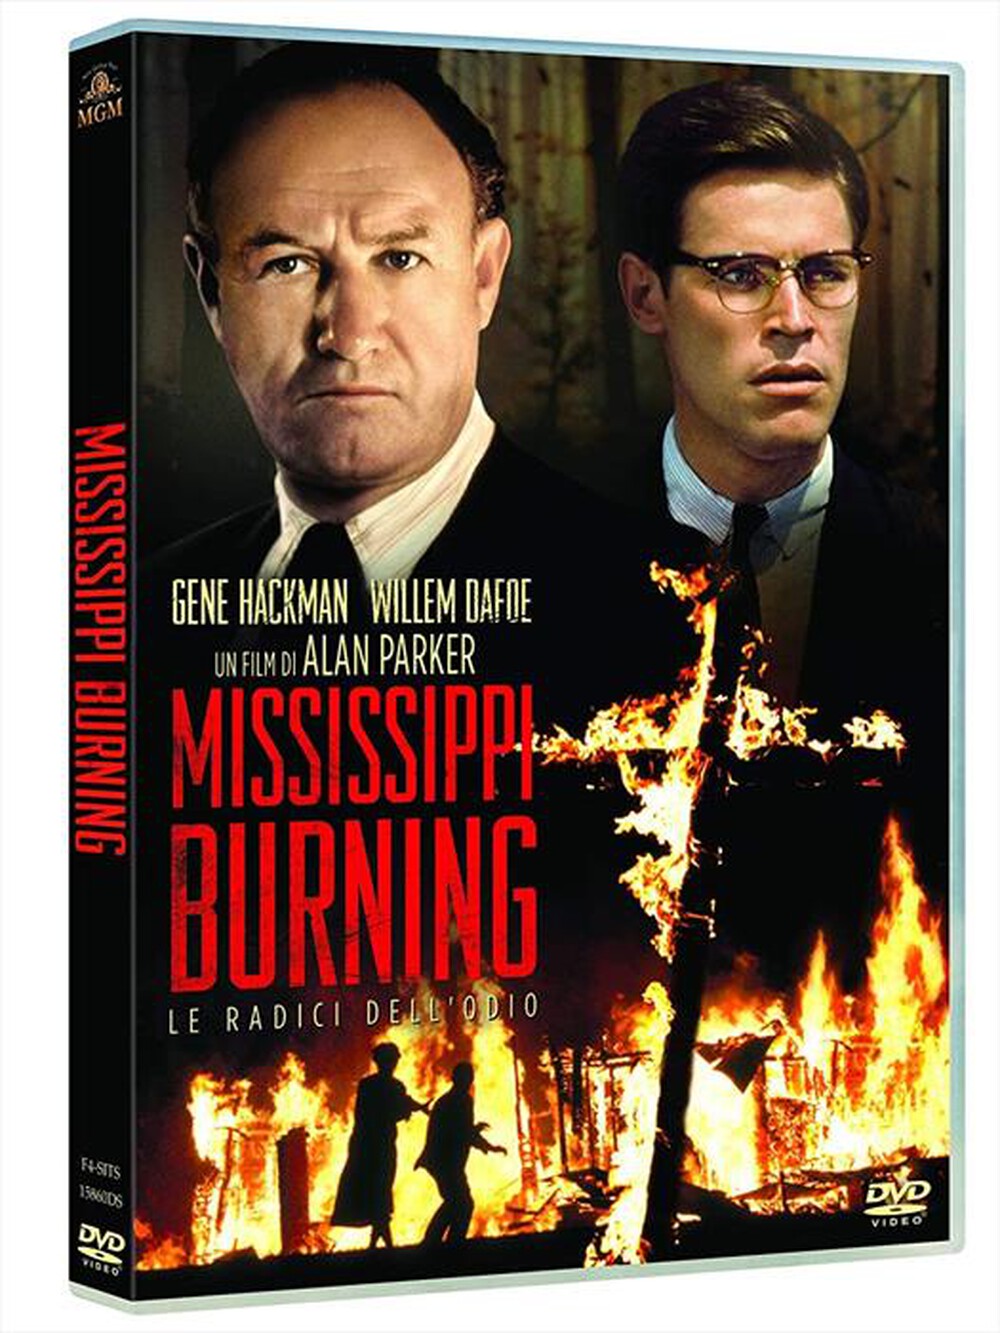 "Mgm - Mississippi Burning - Le Radici Dell'Odio"